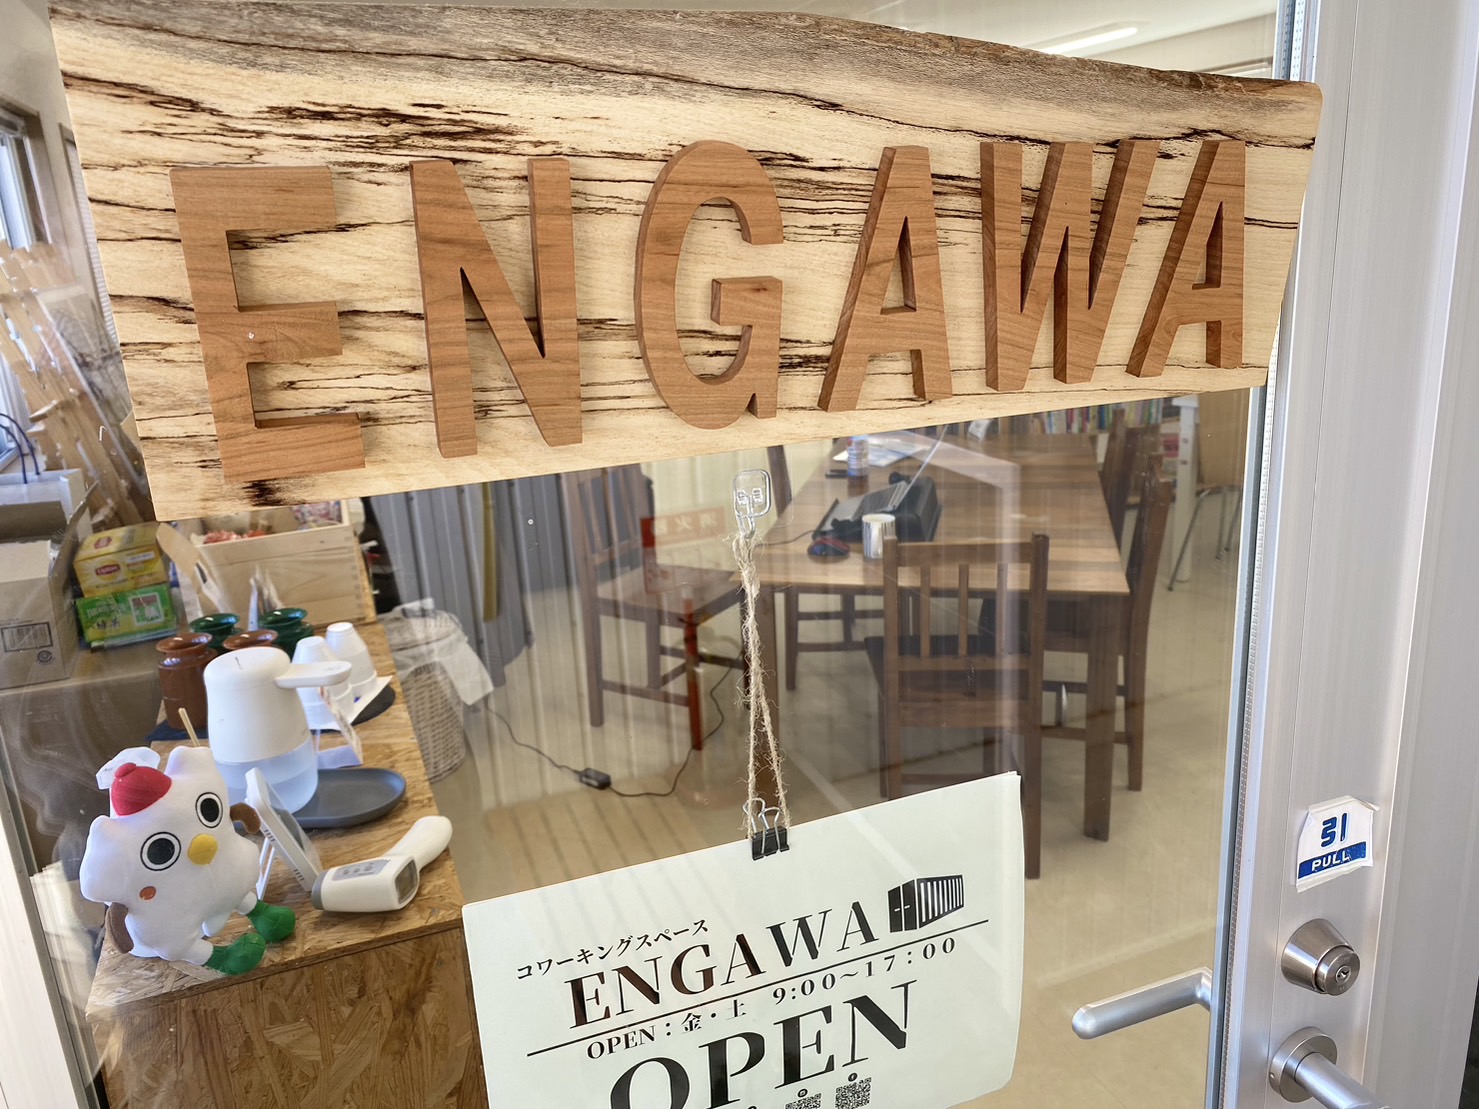 ENGAWA入口と看板